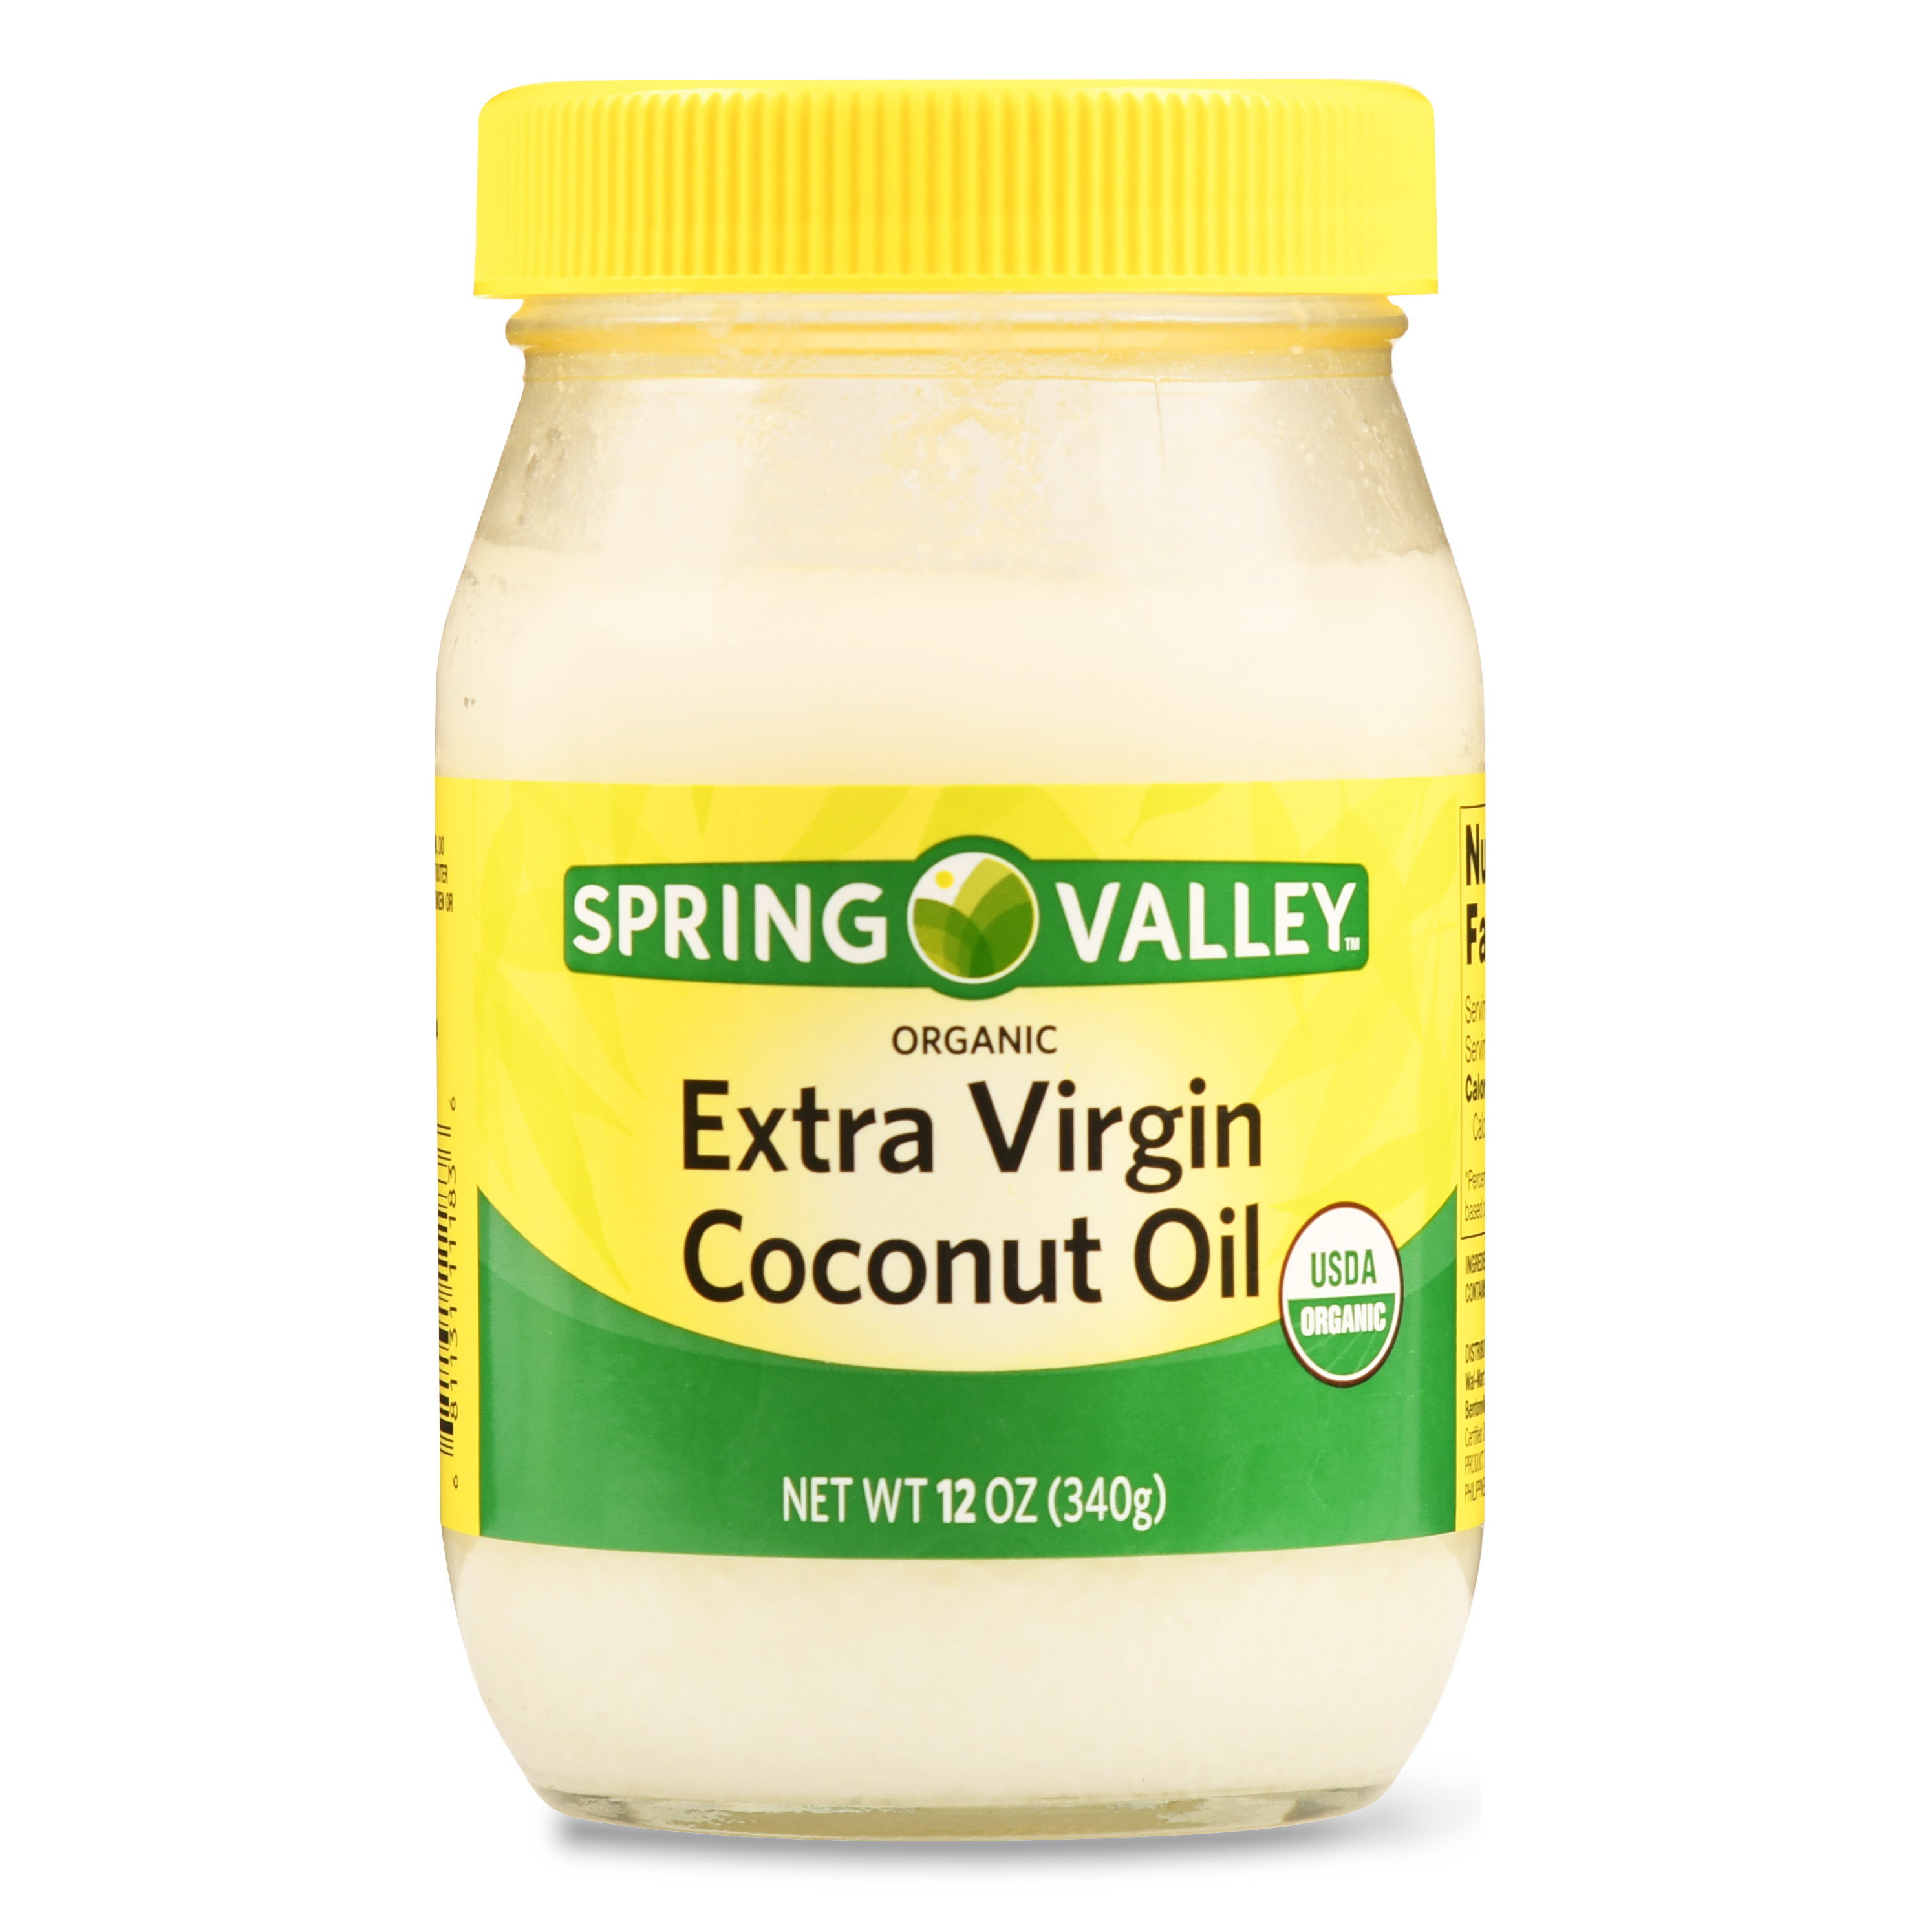 Spring Valley Organic Extra Virgin Coconut Oil, 12.0 Oz - image 1 of 6